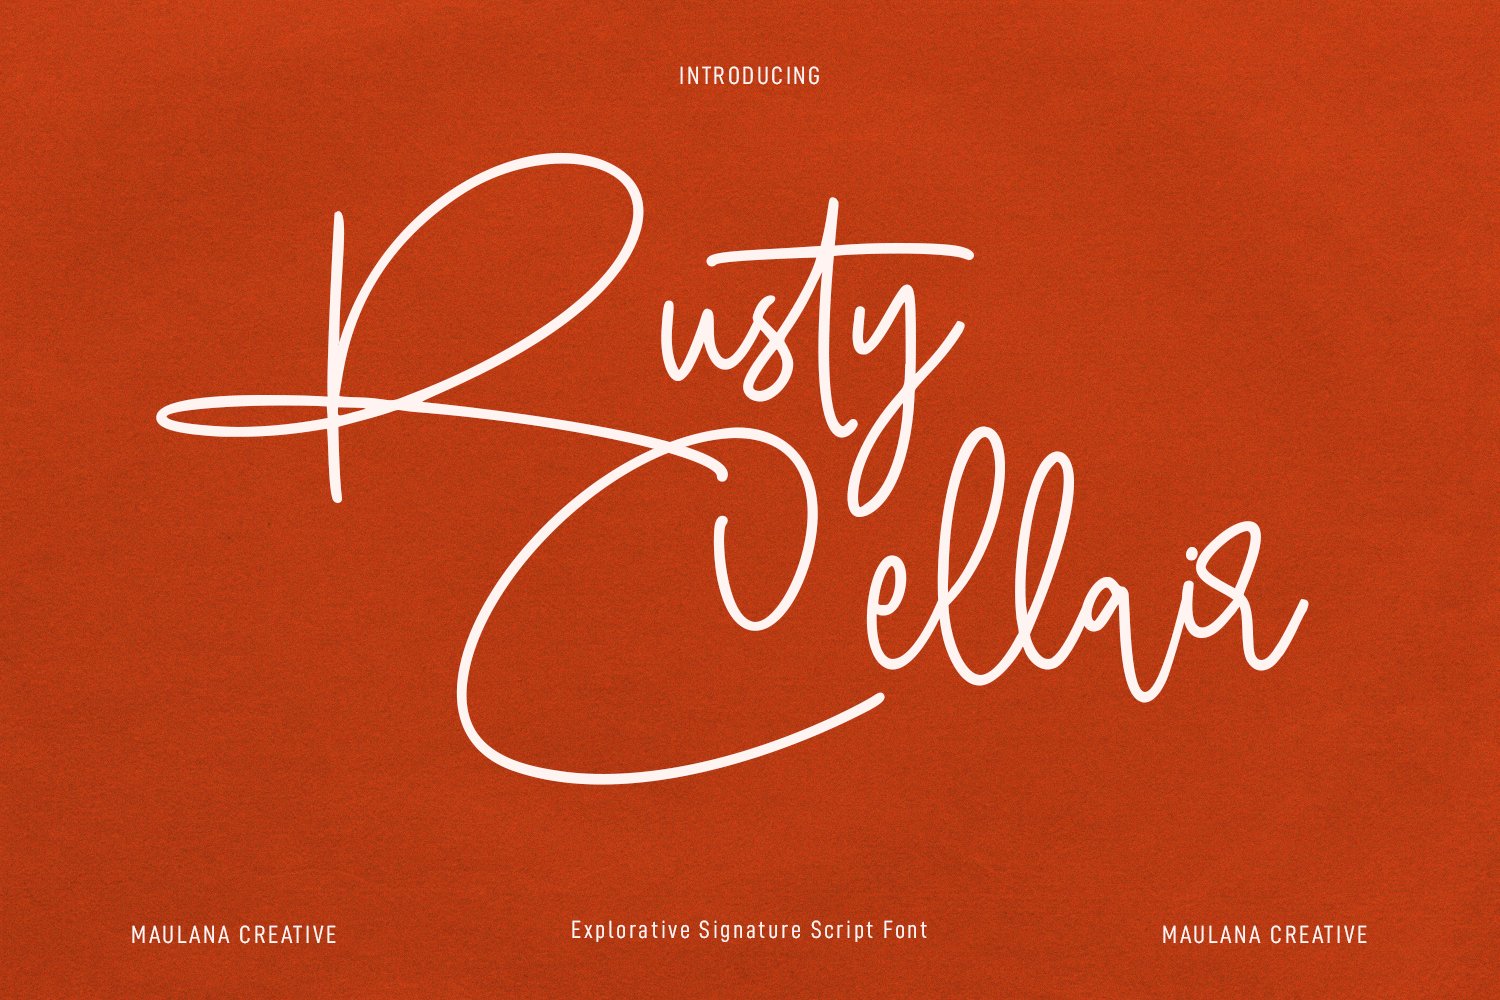 rusty cellair signature script font 1 705